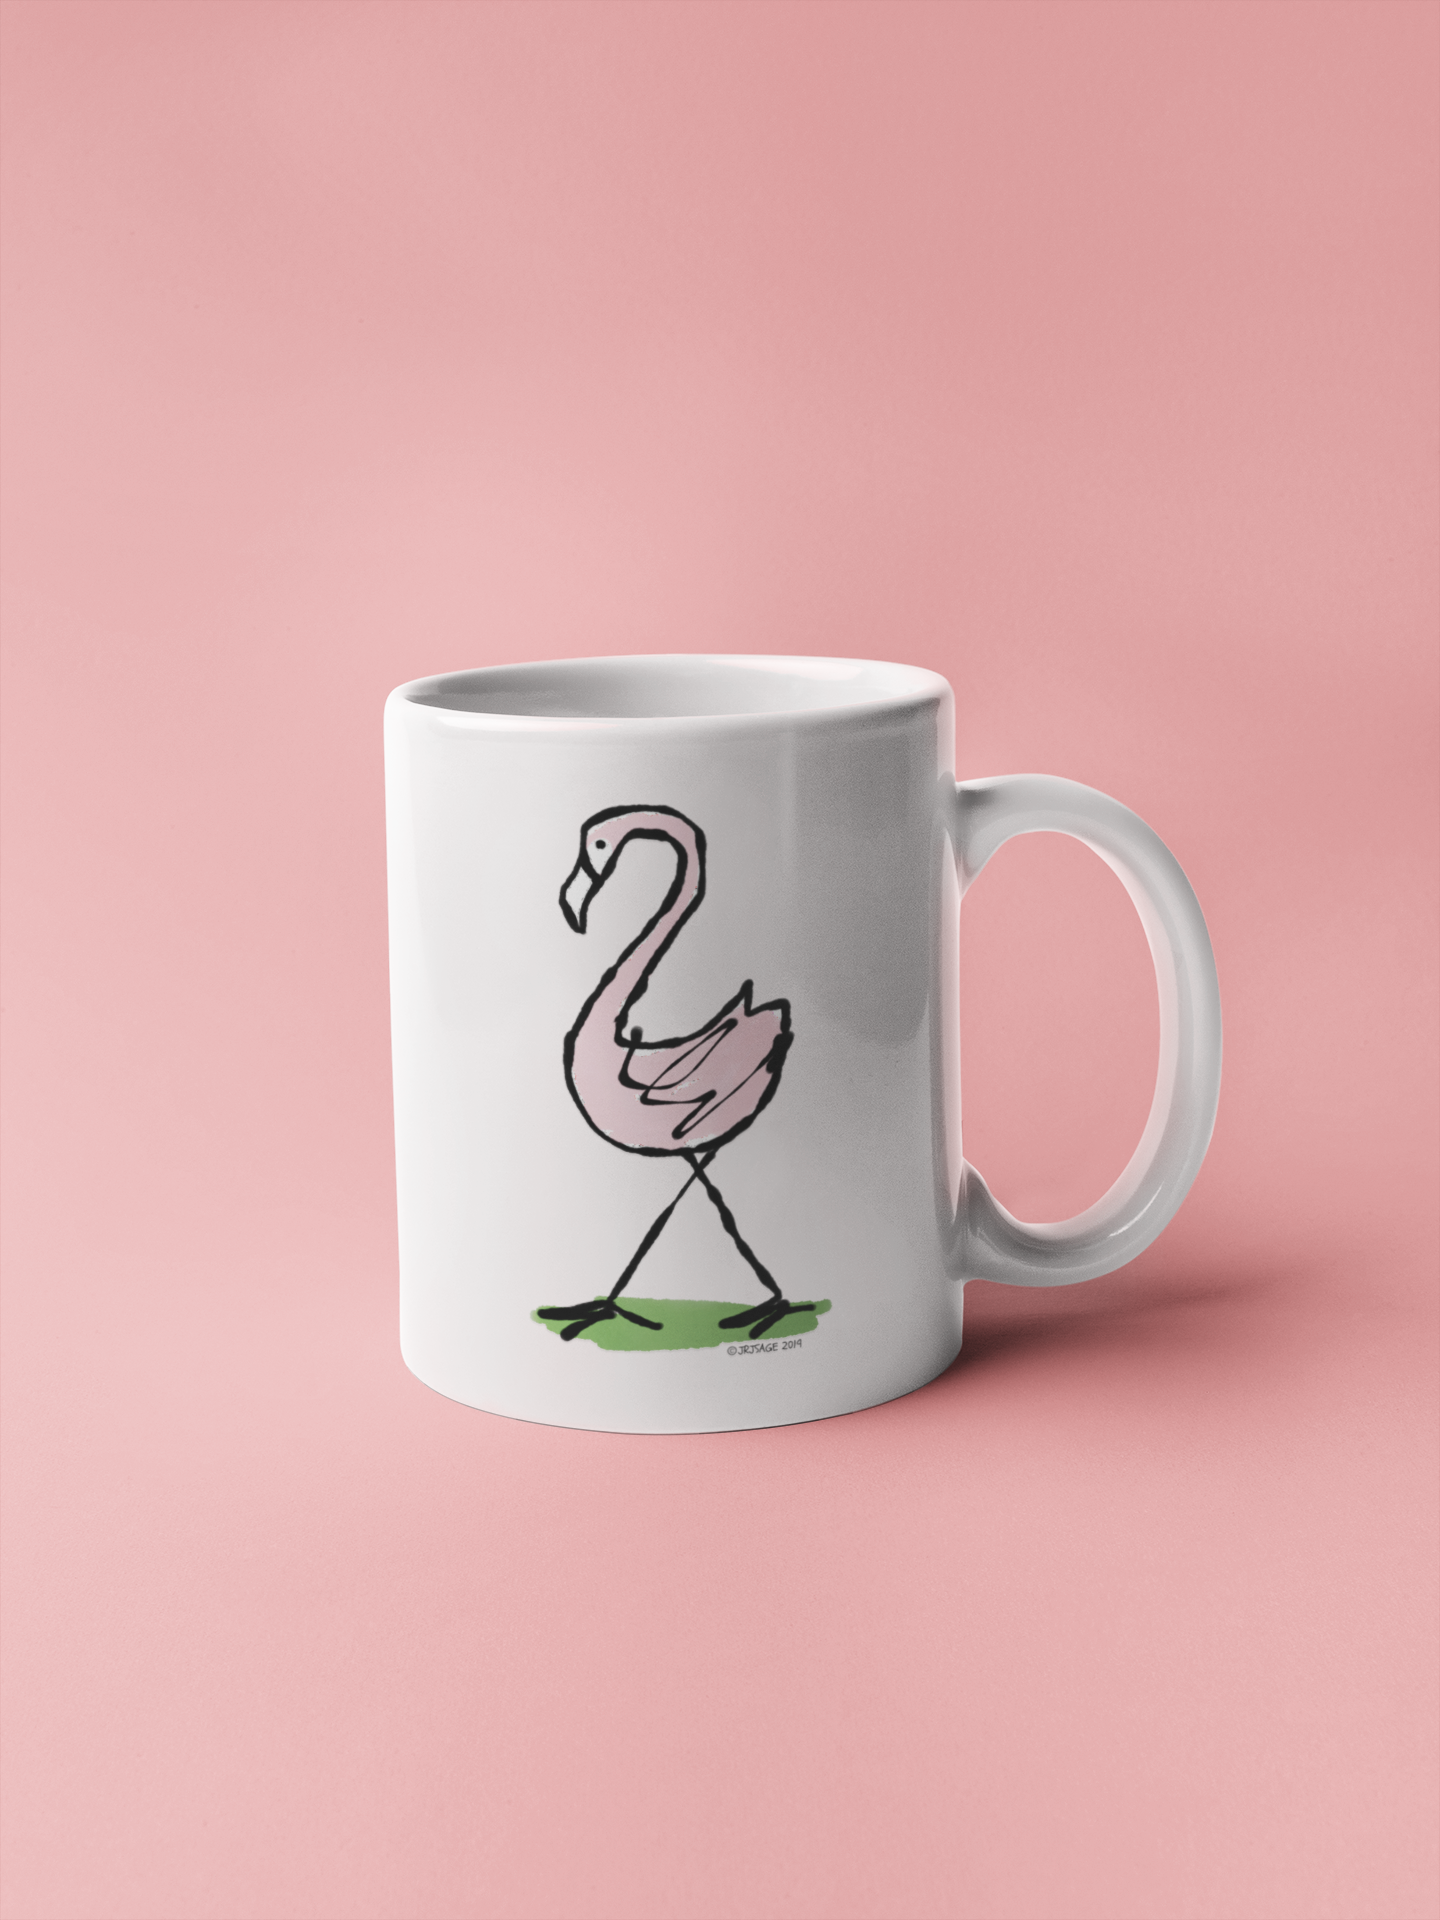 Pink Flamingo mug - Original cute Flamingo illustrated coffee mug by Hector and Bone